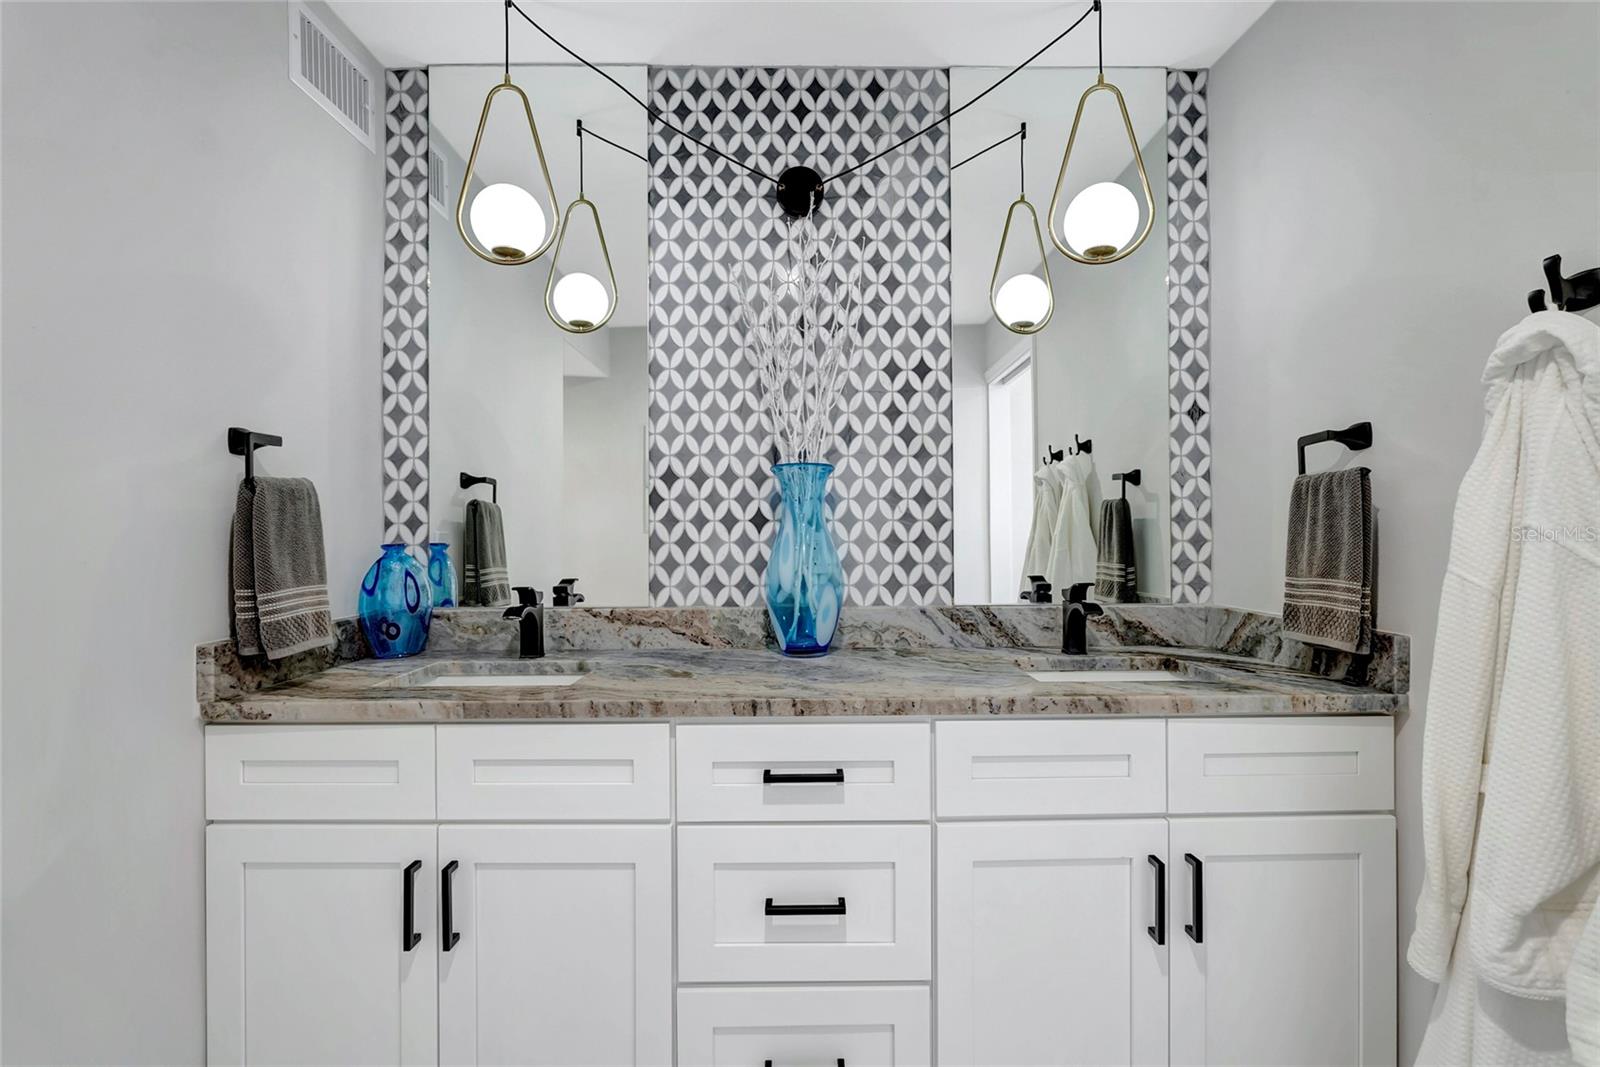 Double vanity with granite countertop and marble backsplash